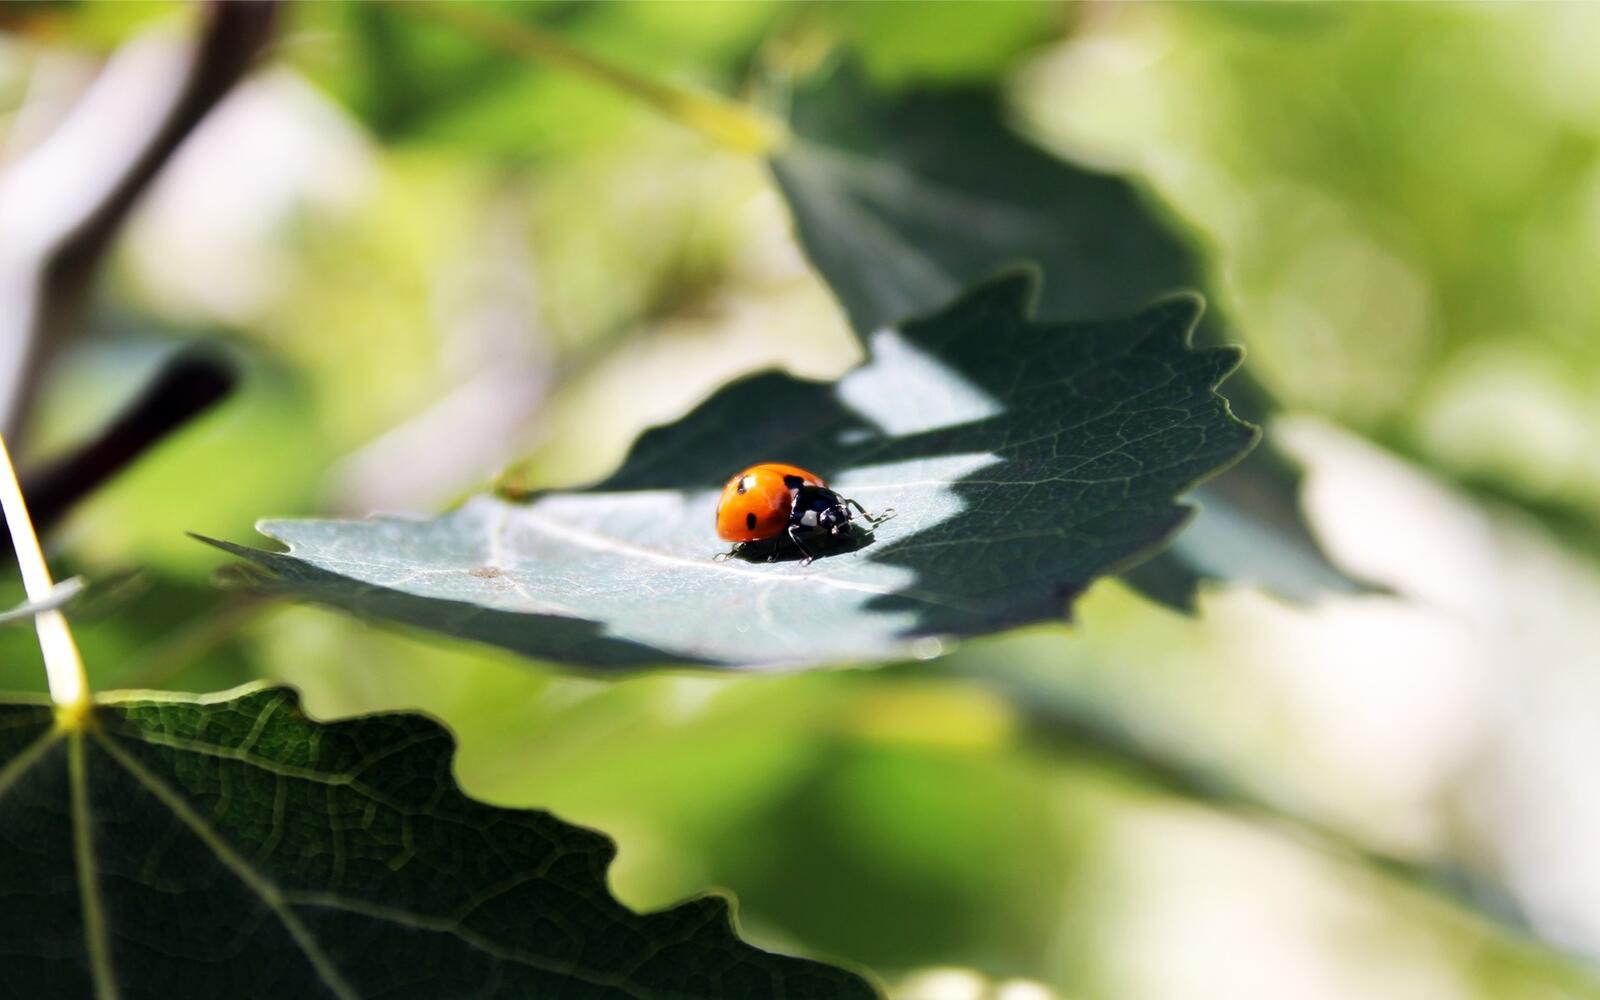 Free photo A yellow ladybug on a green leaf.